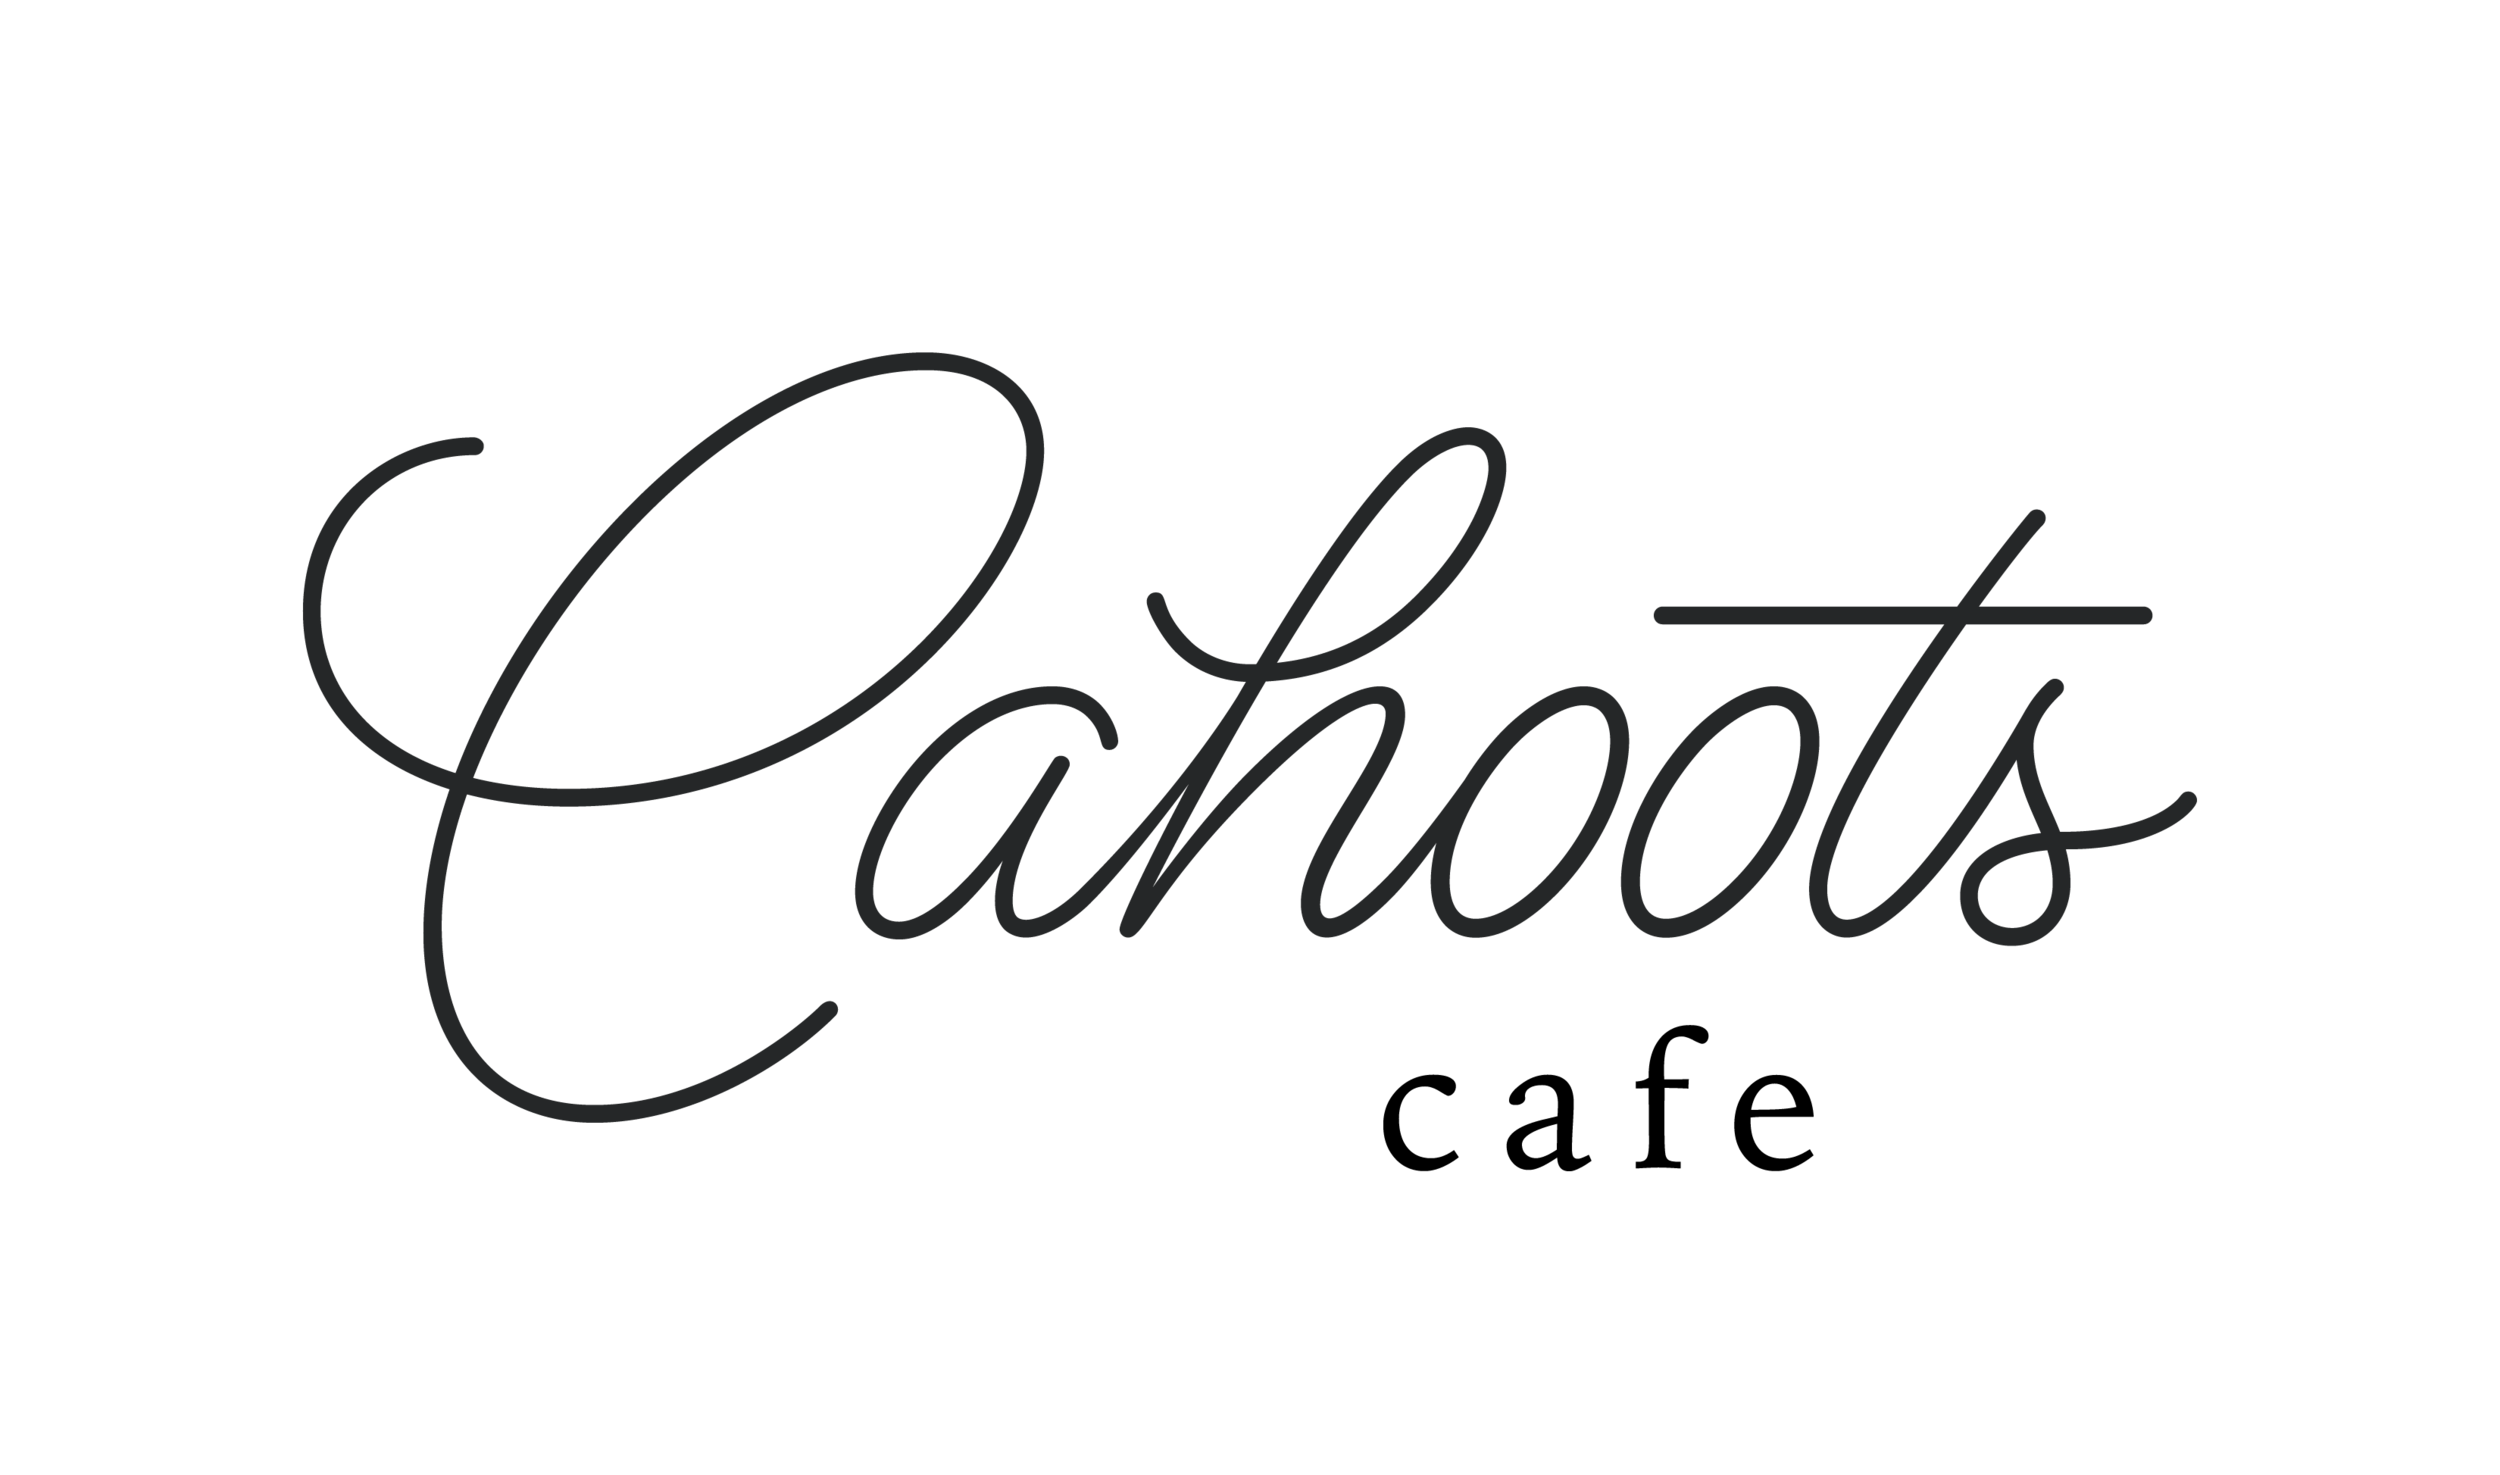 Cahoots Cafe